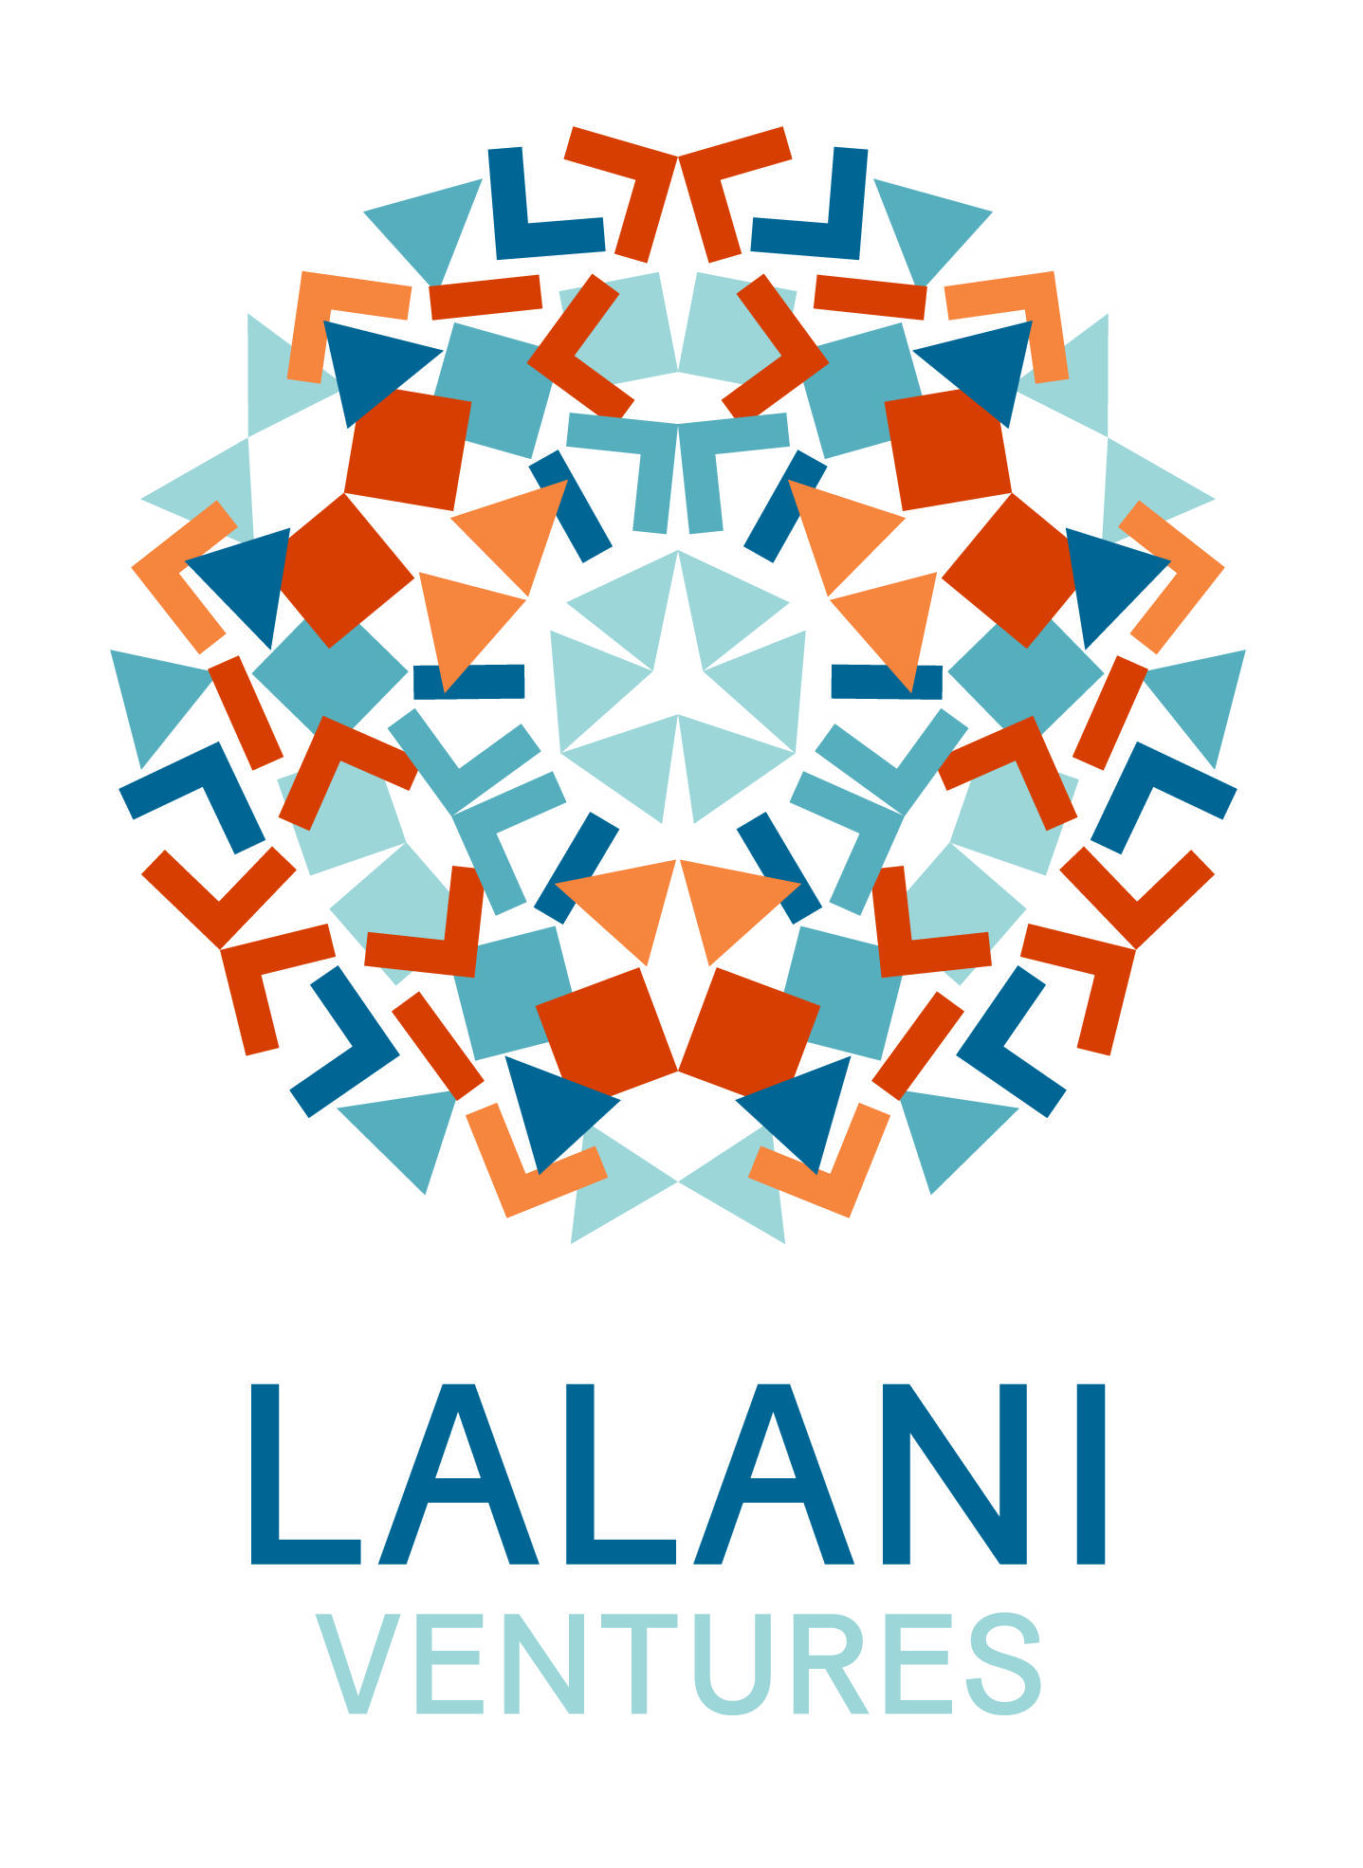 Lalani Ventures logo